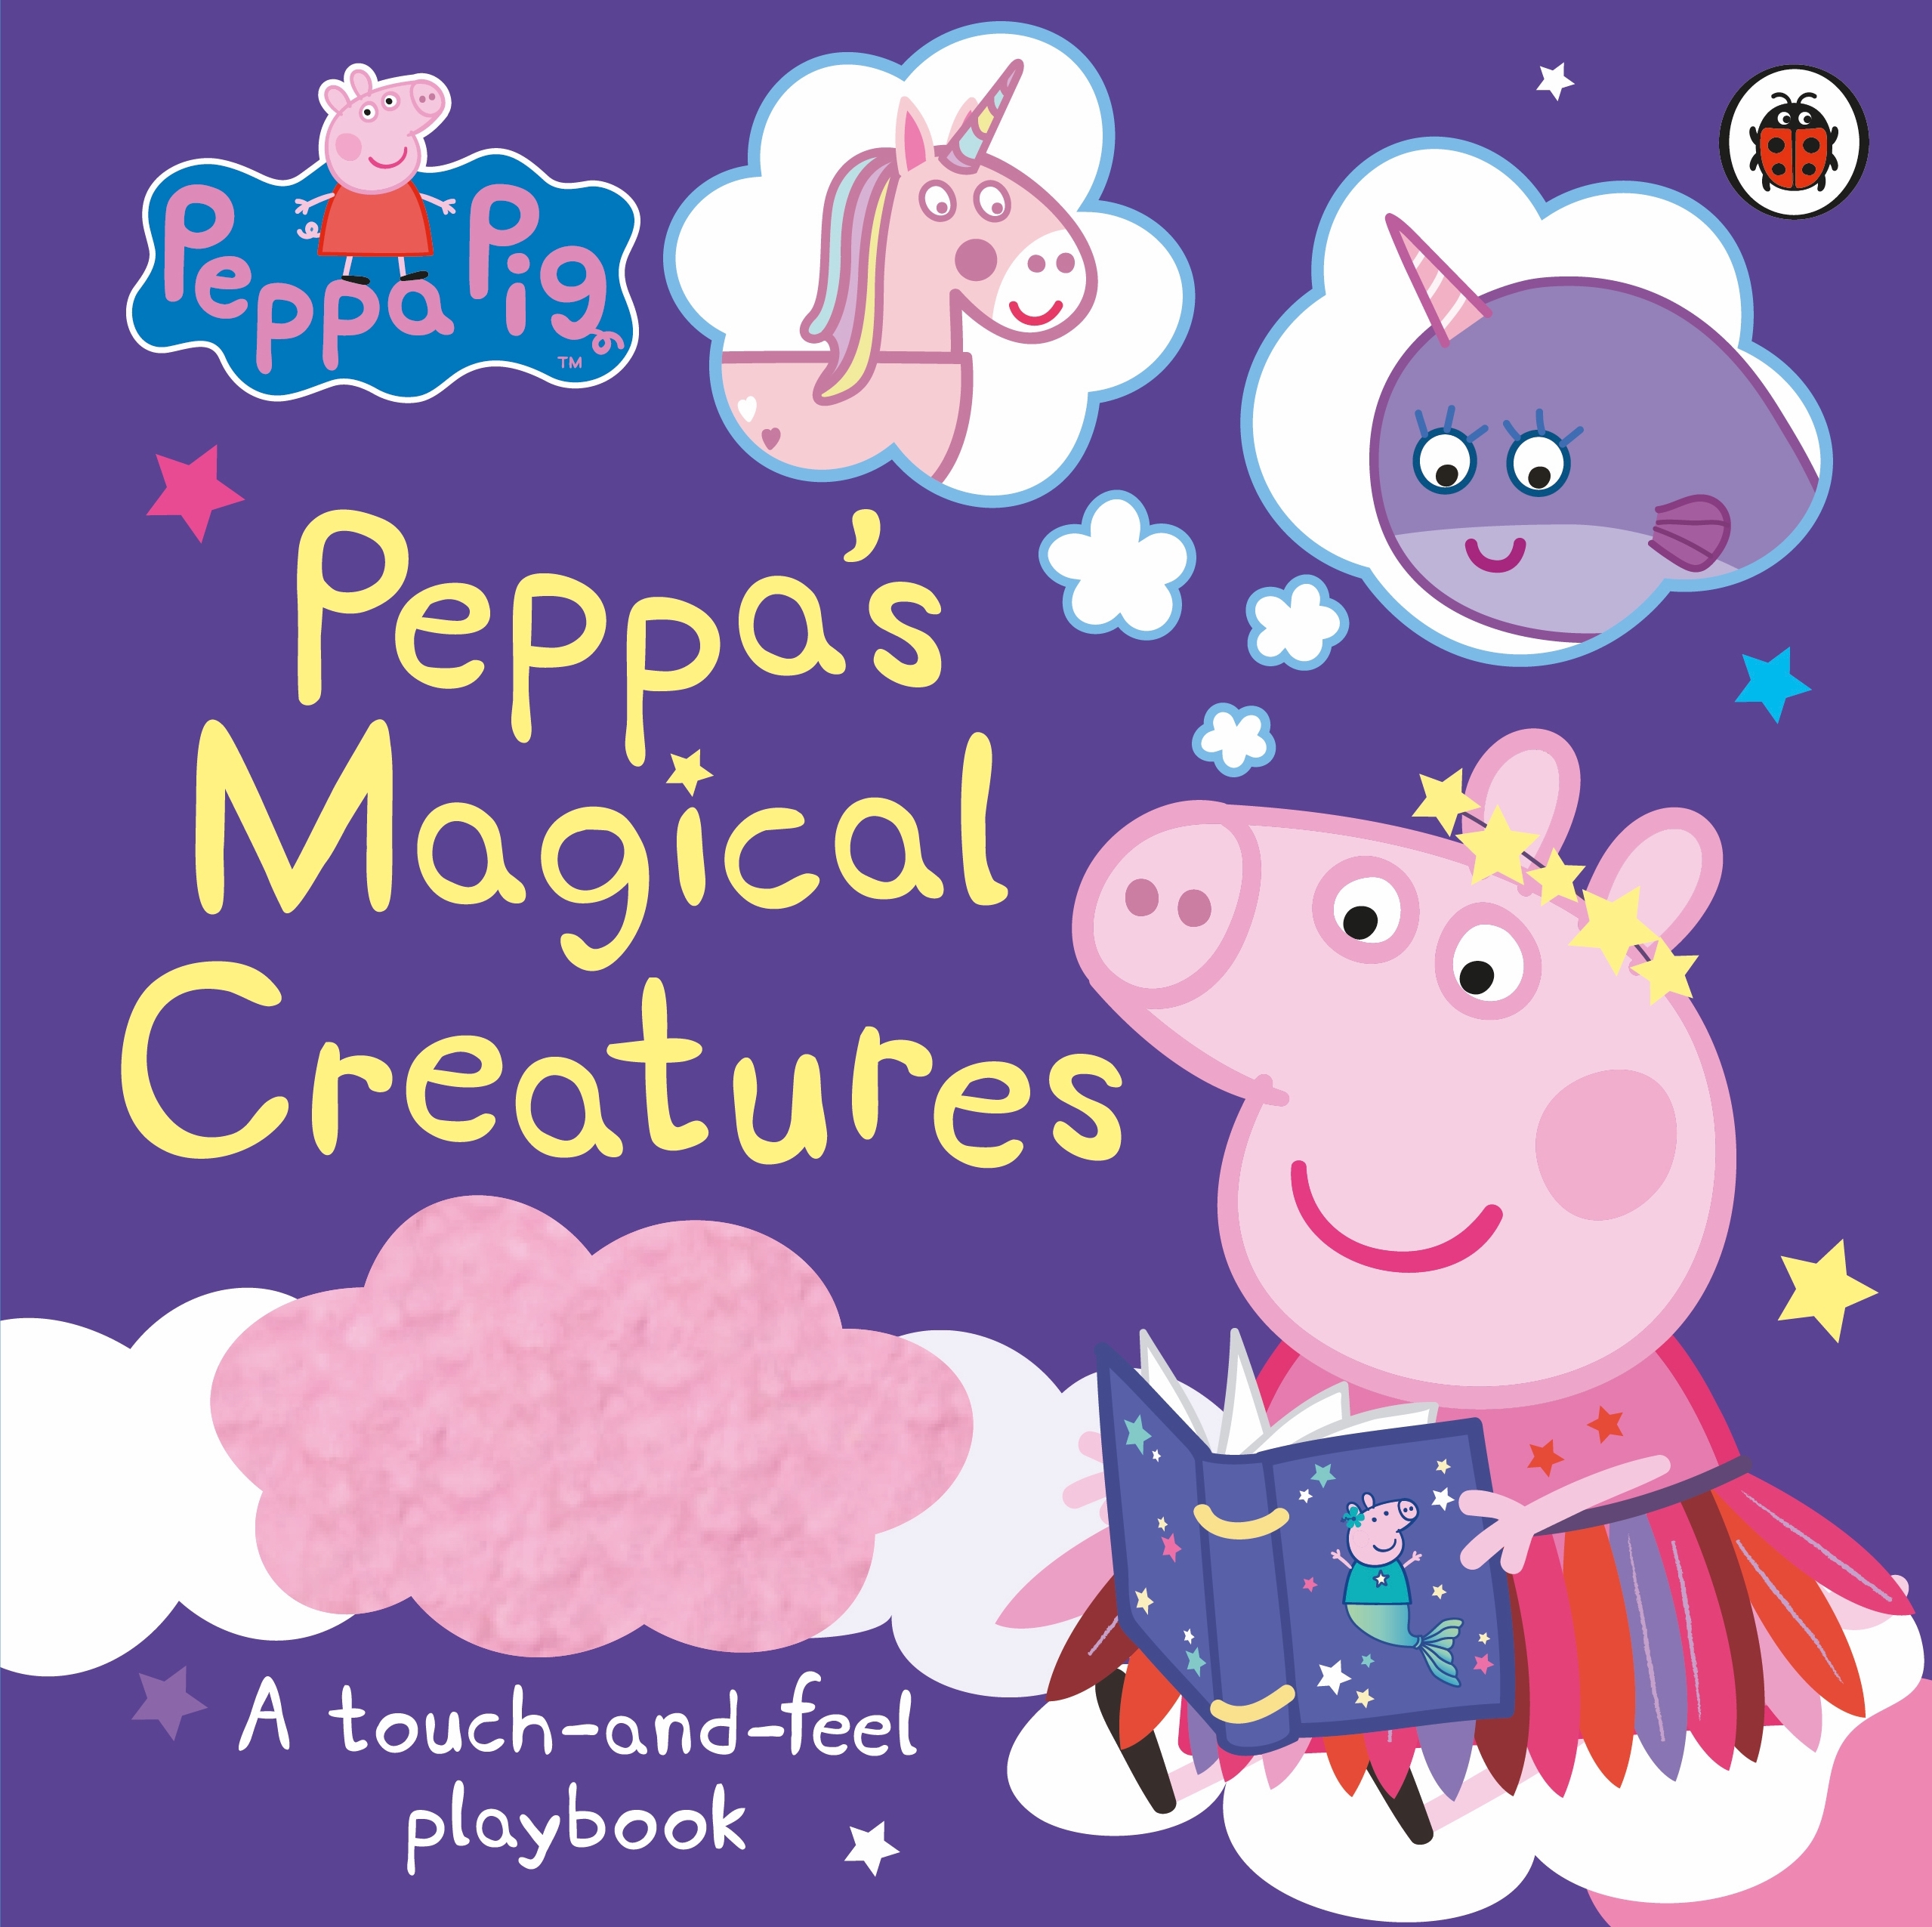 Peppa Pig: Peppa's Magical Creatures by Peppa Pig - Penguin Books Australia